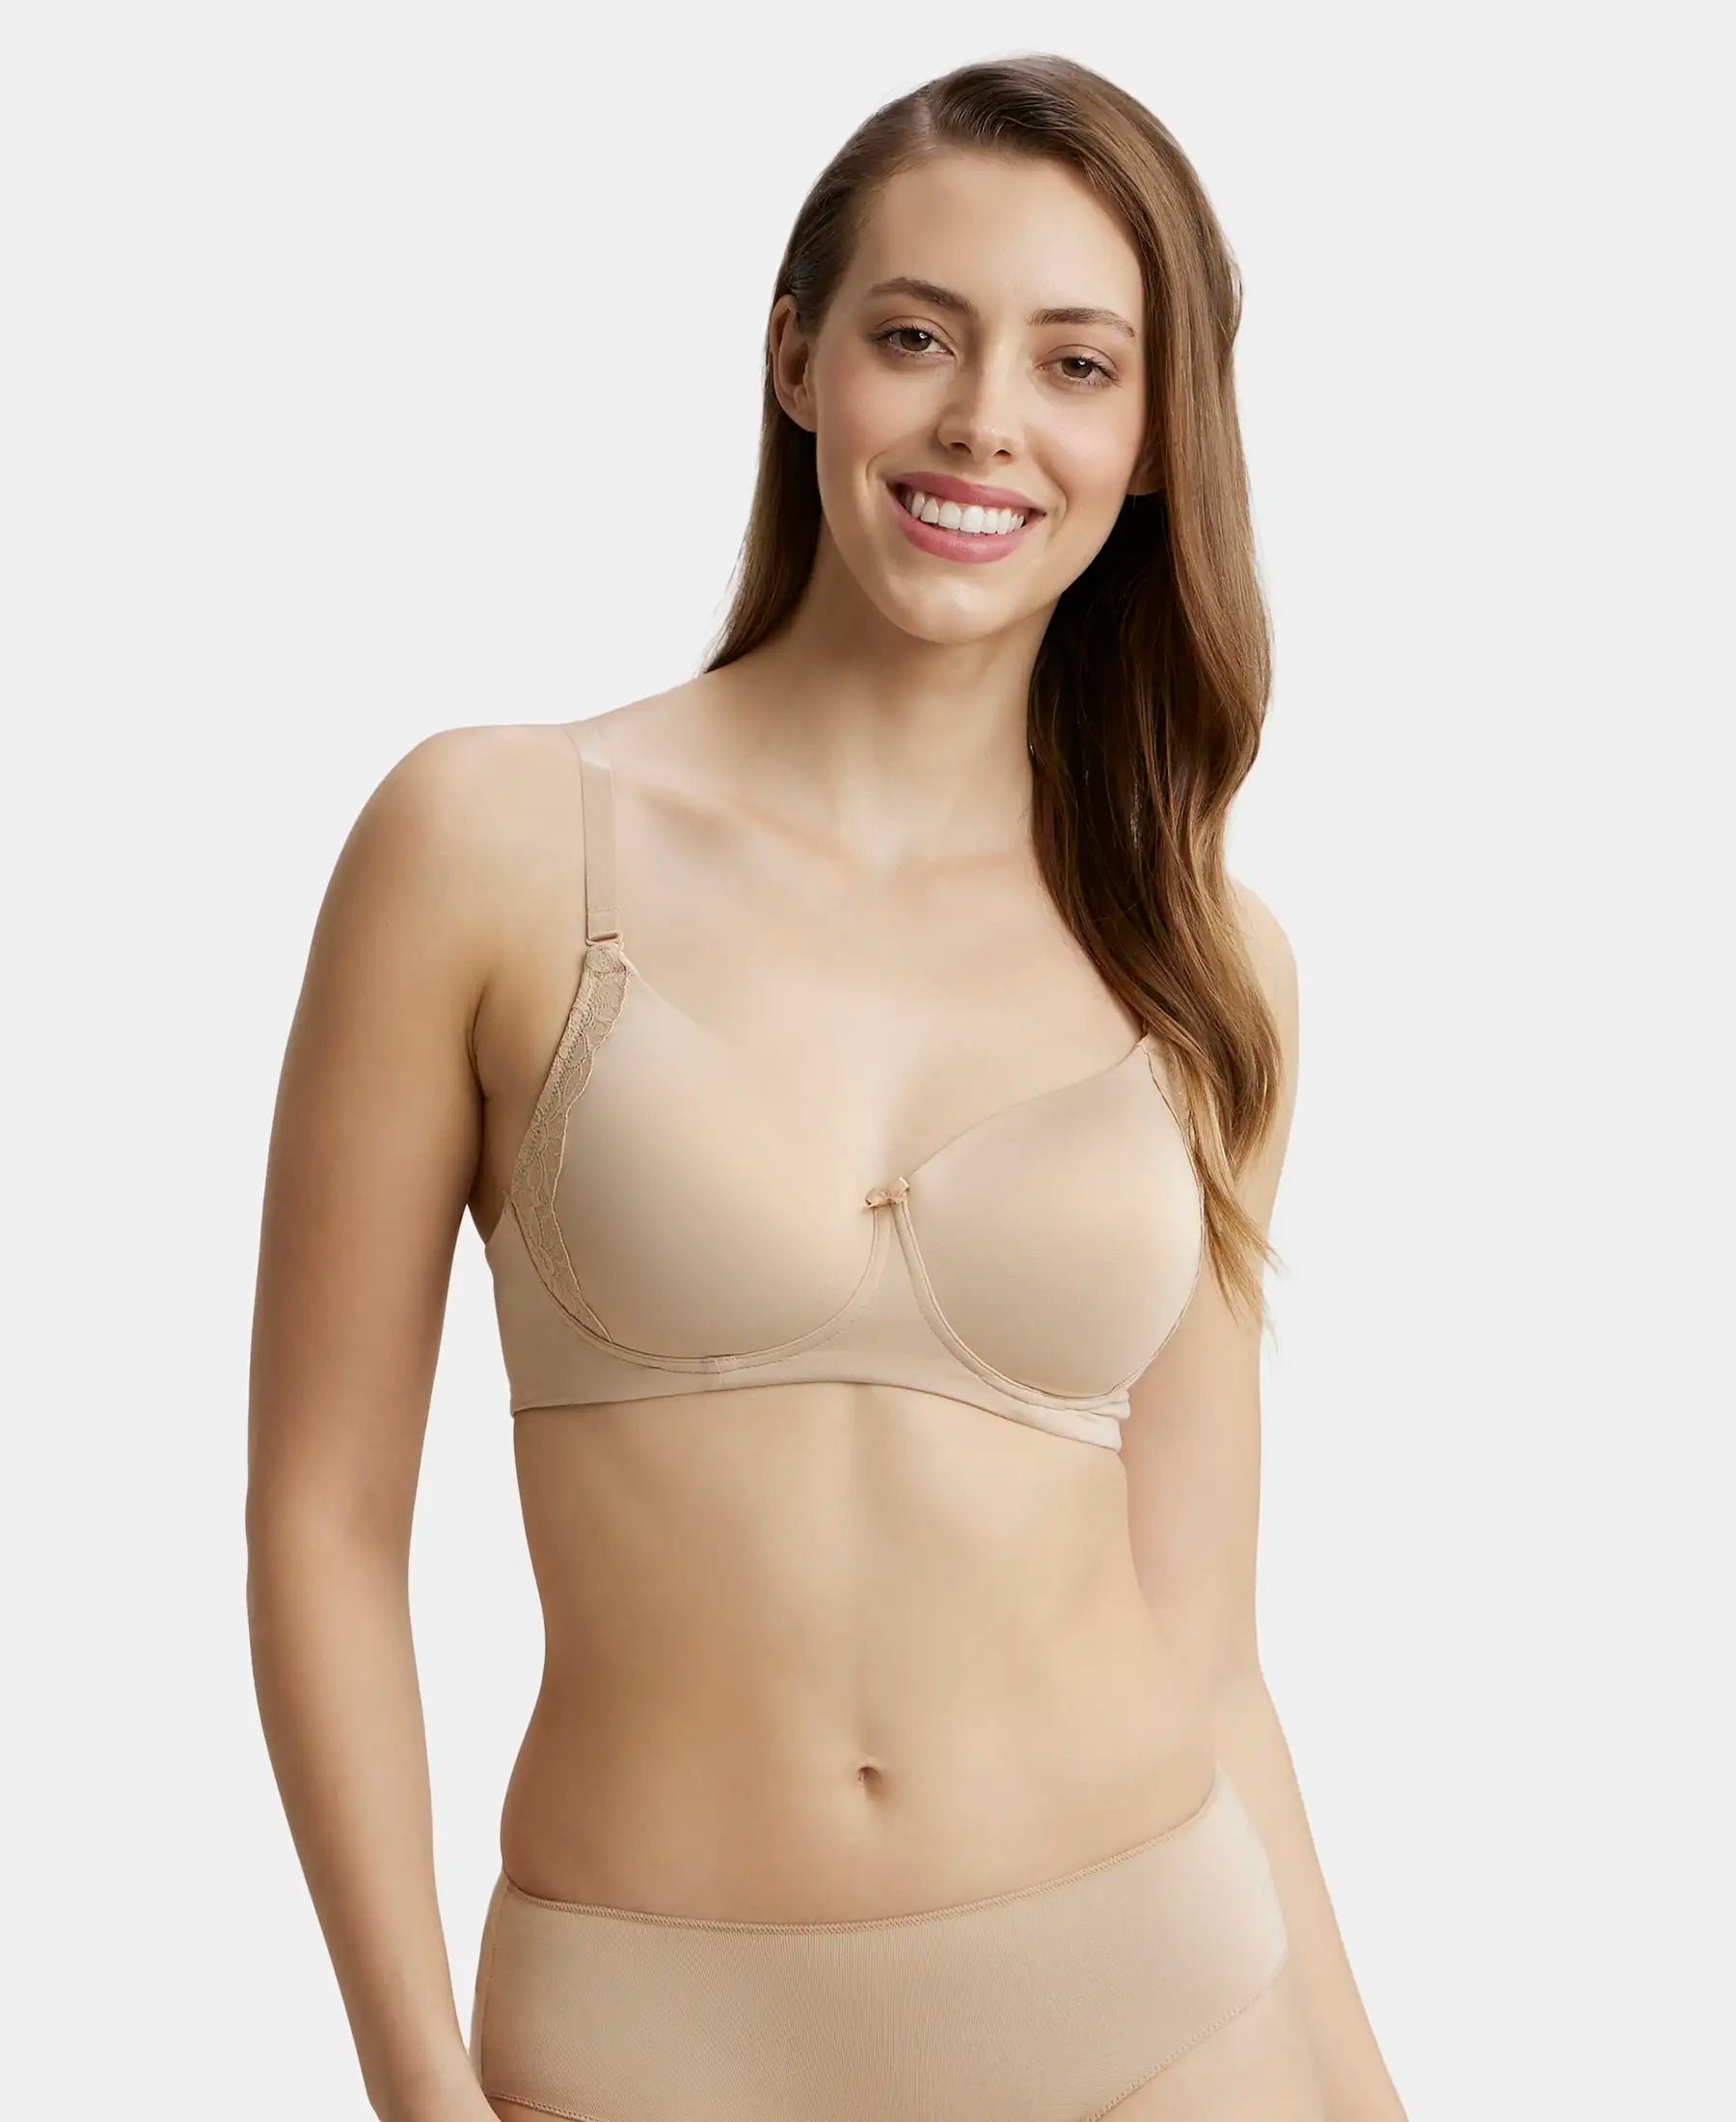 TQWQT Women Push Up Bra Plus Size No Underwire Soft Padding Lift Up T-Shirt  Bra Complexion 38A